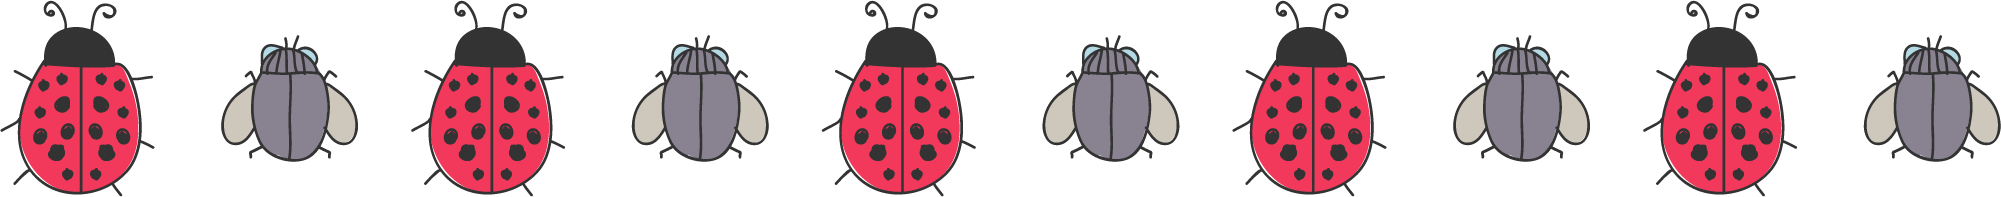 Ladybug Insect PNG Image Transparent Background